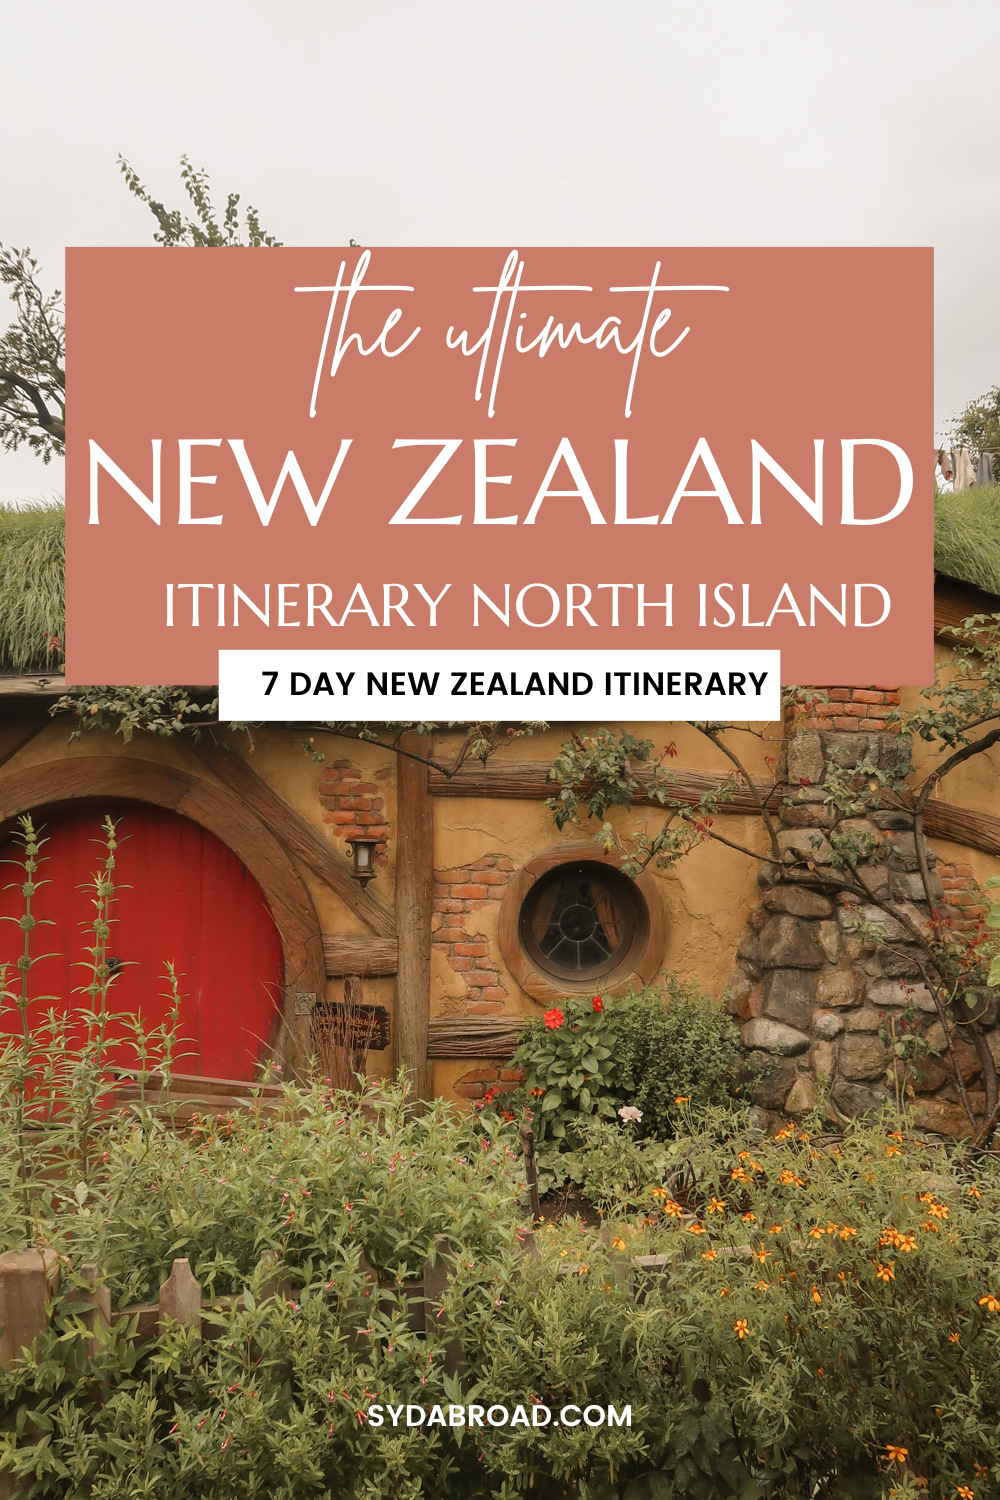 New Zealand itinerary north island